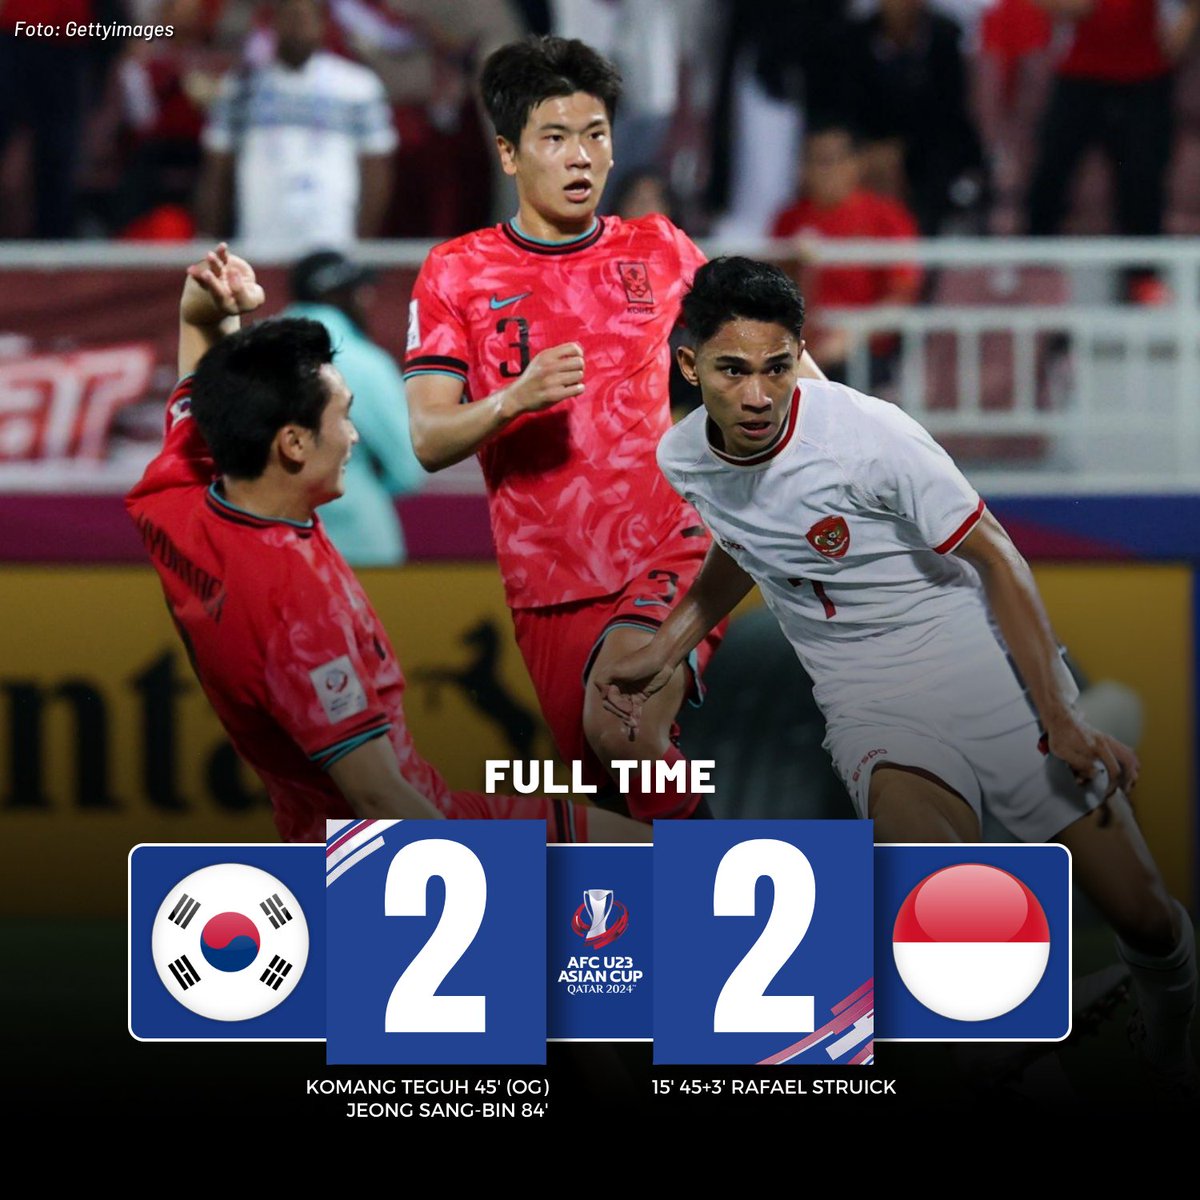 🚨FULL TIME🚨
Korea Selatan U23🇰🇷 2-2 Indonesia🇮🇩

Skor sama kuat, lanjut extra time.
#TimnasDay #AsianCup2023